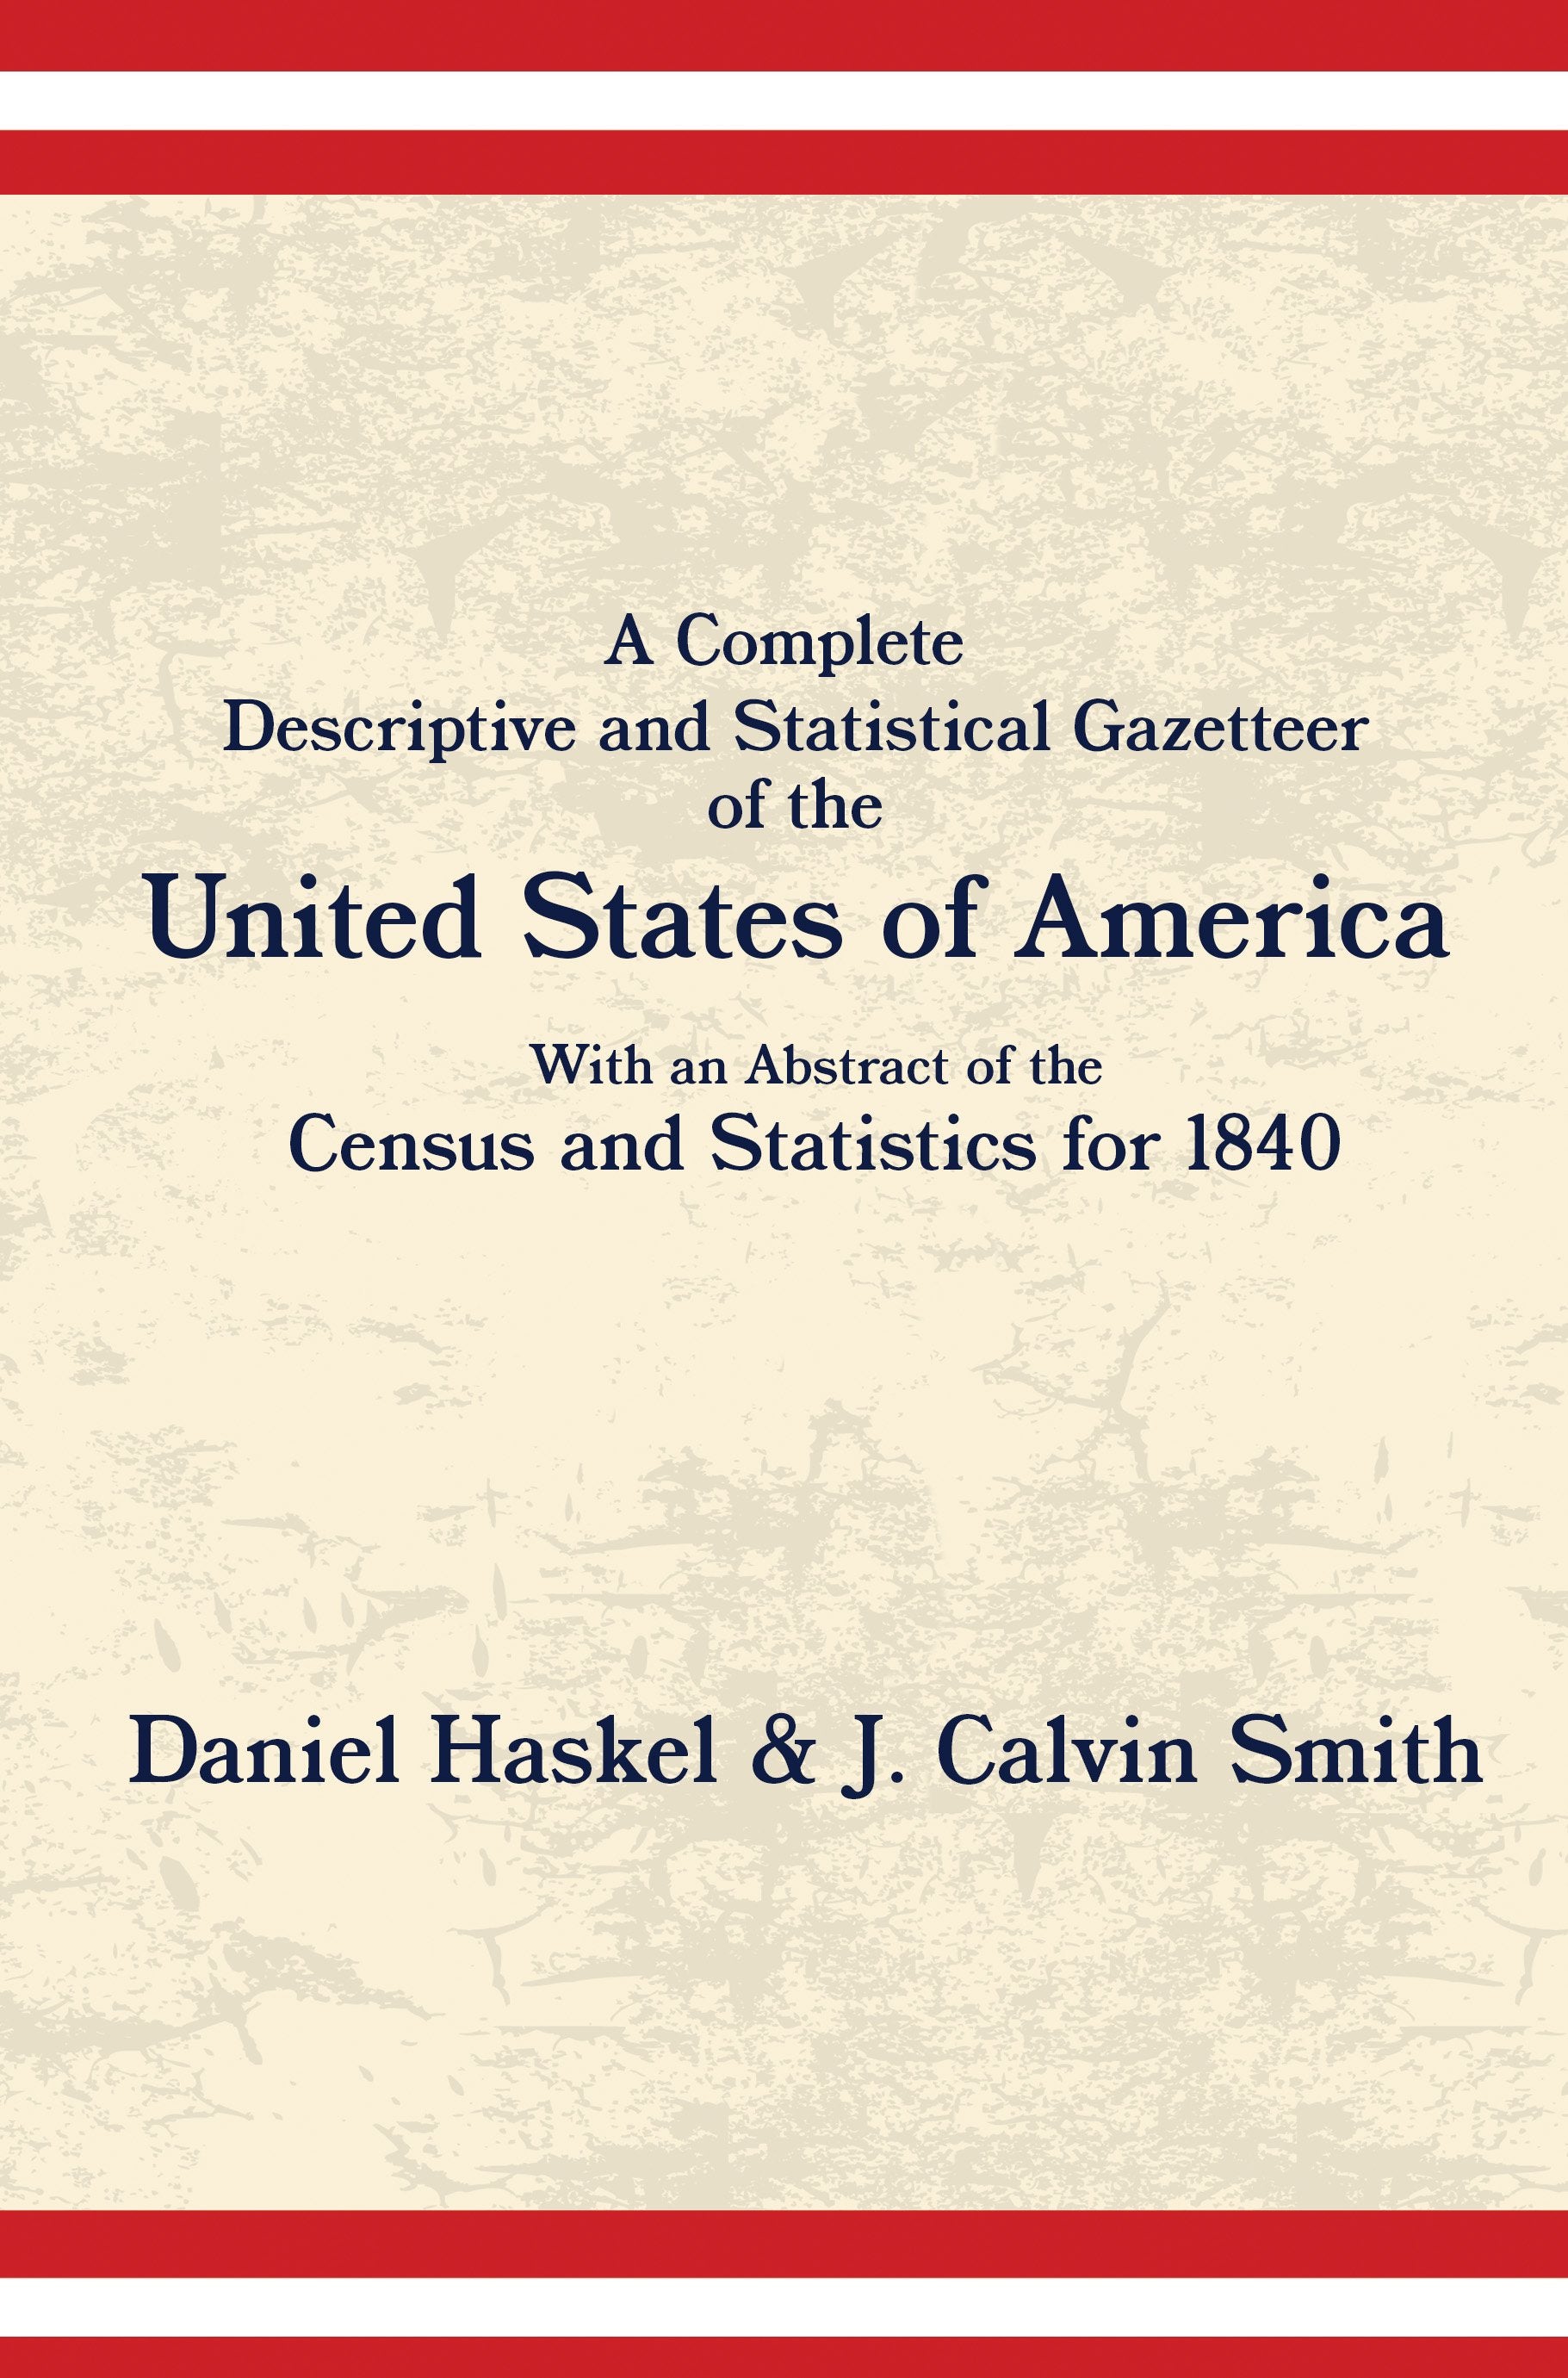 A Complete Descriptive and Statistical Gazetteer